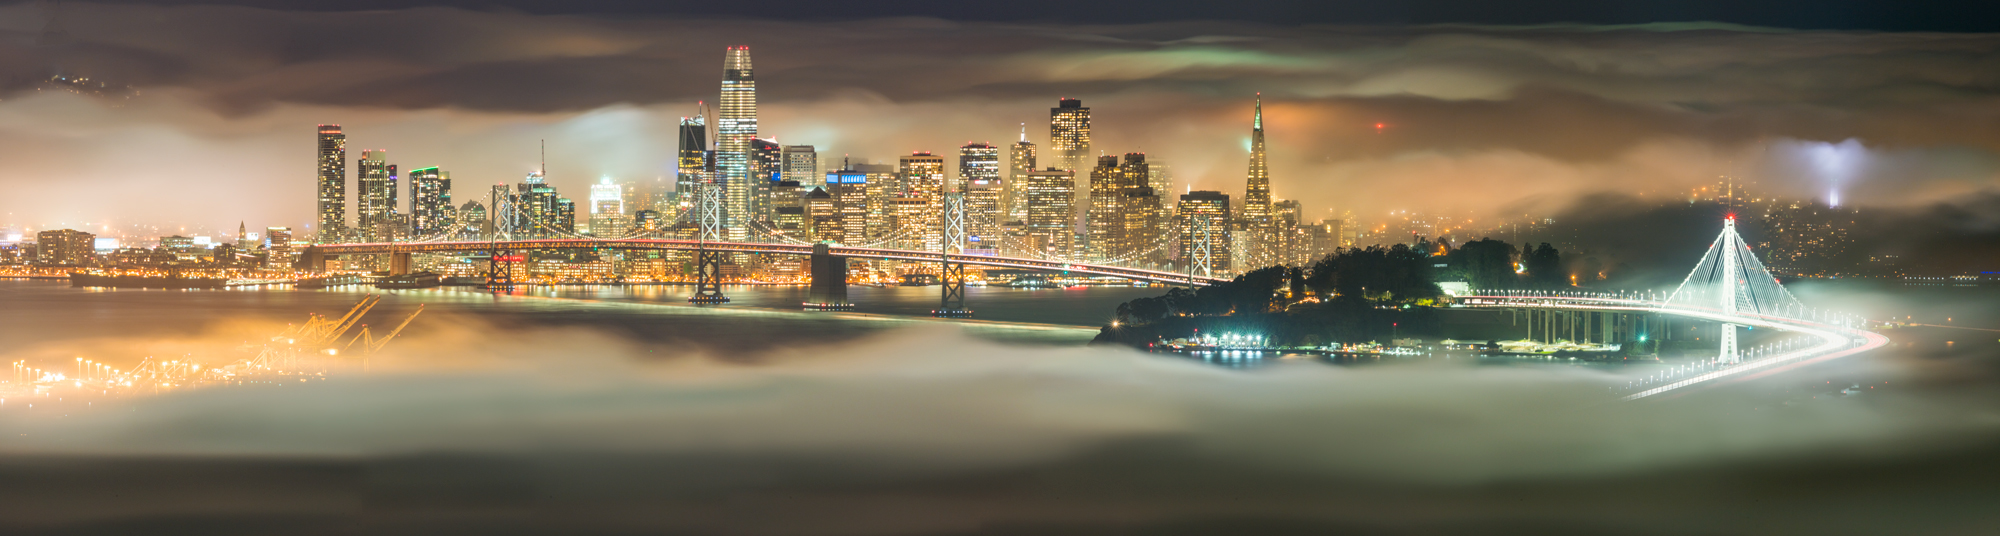 Oakland Hills San Francisco East Bay Fog Bay Bridge Grizzly Peak Skyline Drive Panorama Fine Art Landscape Photography Mark Lilly